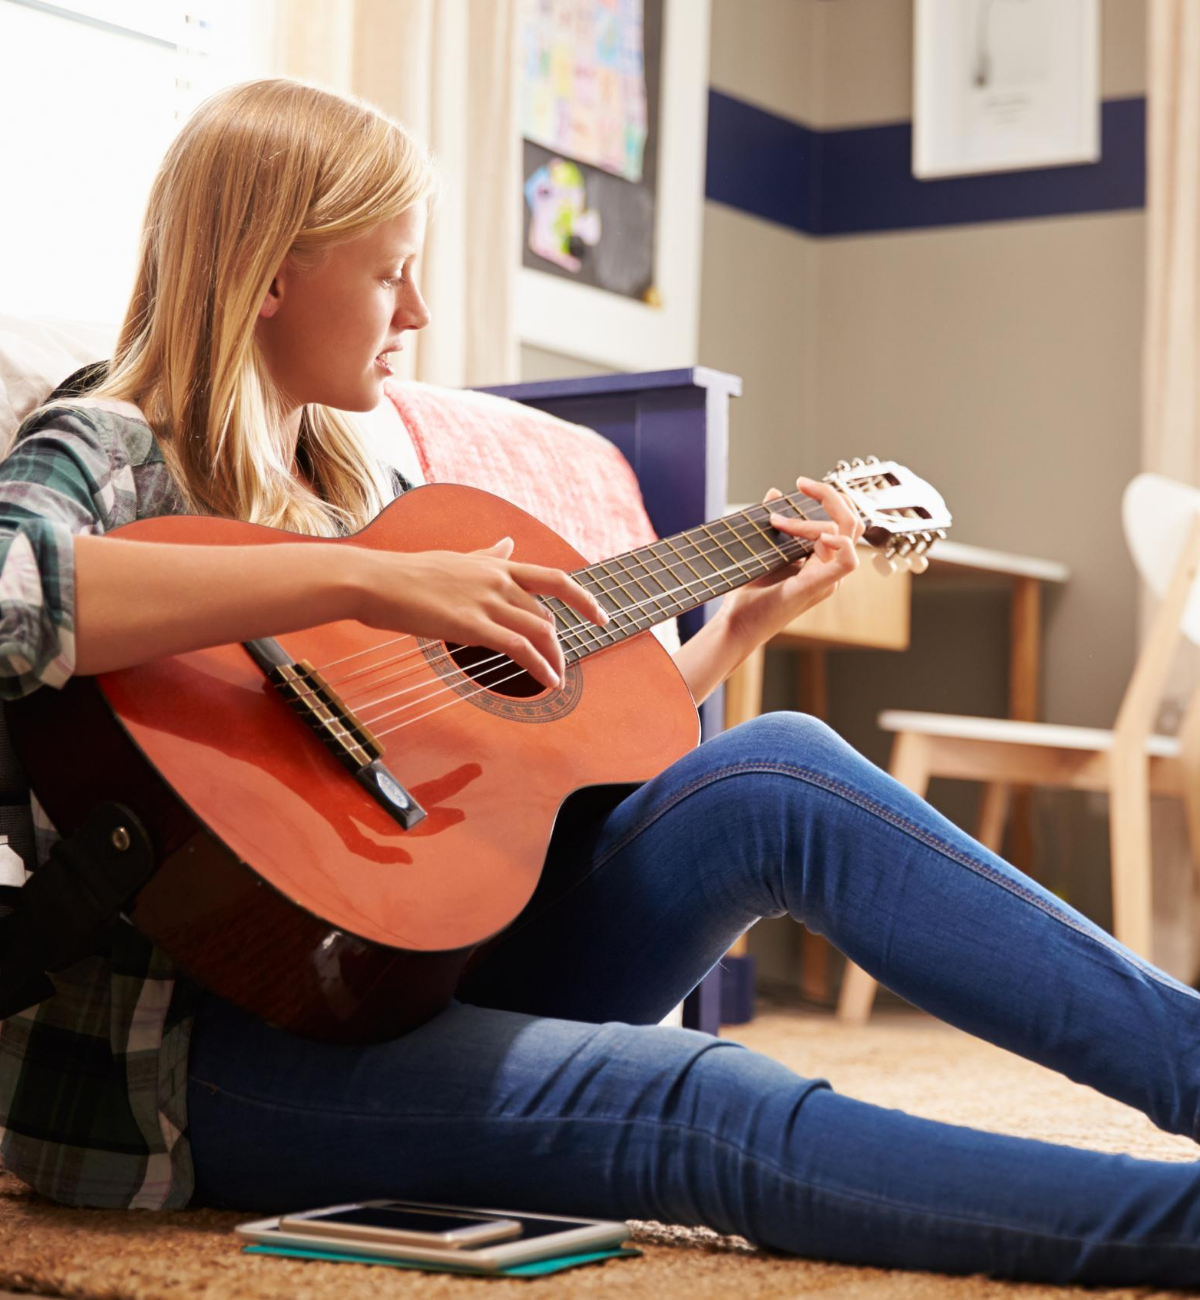 Girl playing guitar sitting on bedroom floor